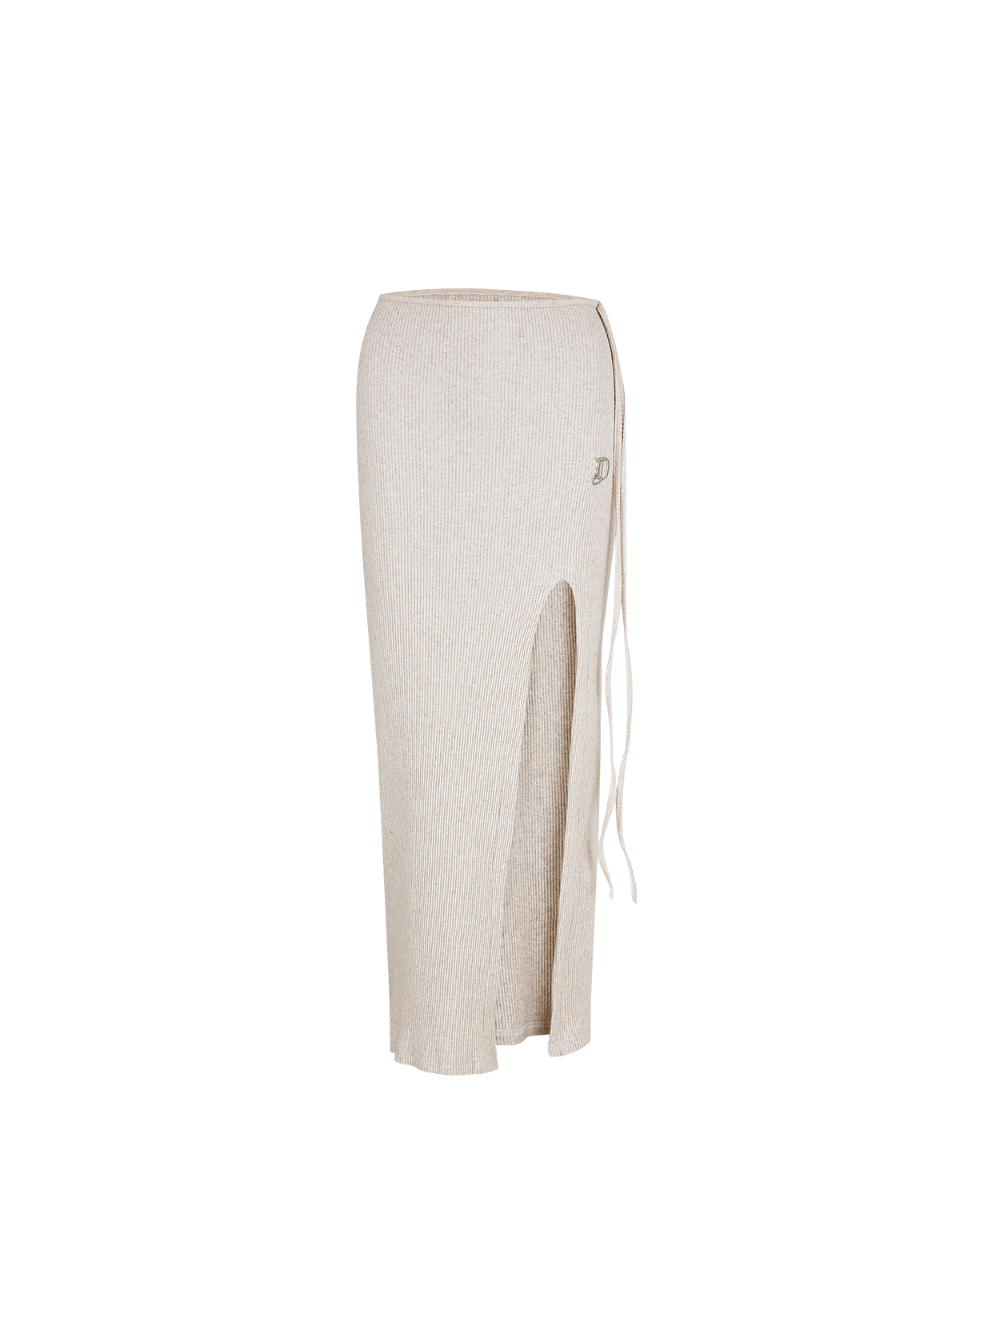 long skirt white color image-S4L1